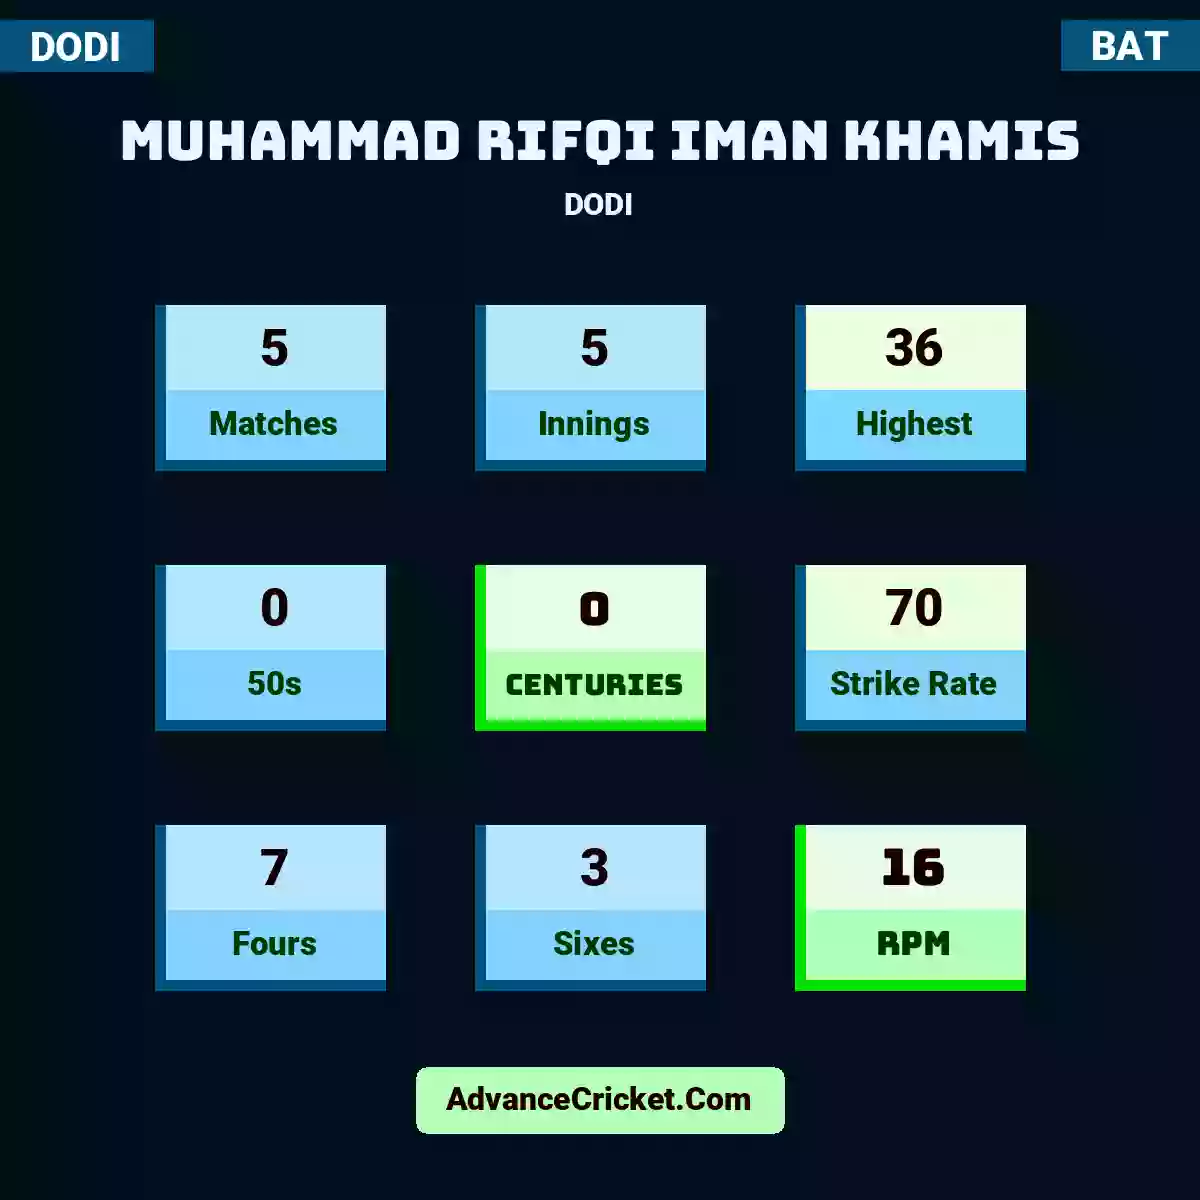 Muhammad Rifqi Iman Khamis DODI , Muhammad Rifqi Iman Khamis played 5 matches, scored 36 runs as highest, 0 half-centuries, and 0 centuries, with a strike rate of 70. m.rifqi.iman.khamis hit 7 fours and 3 sixes, with an RPM of 16.